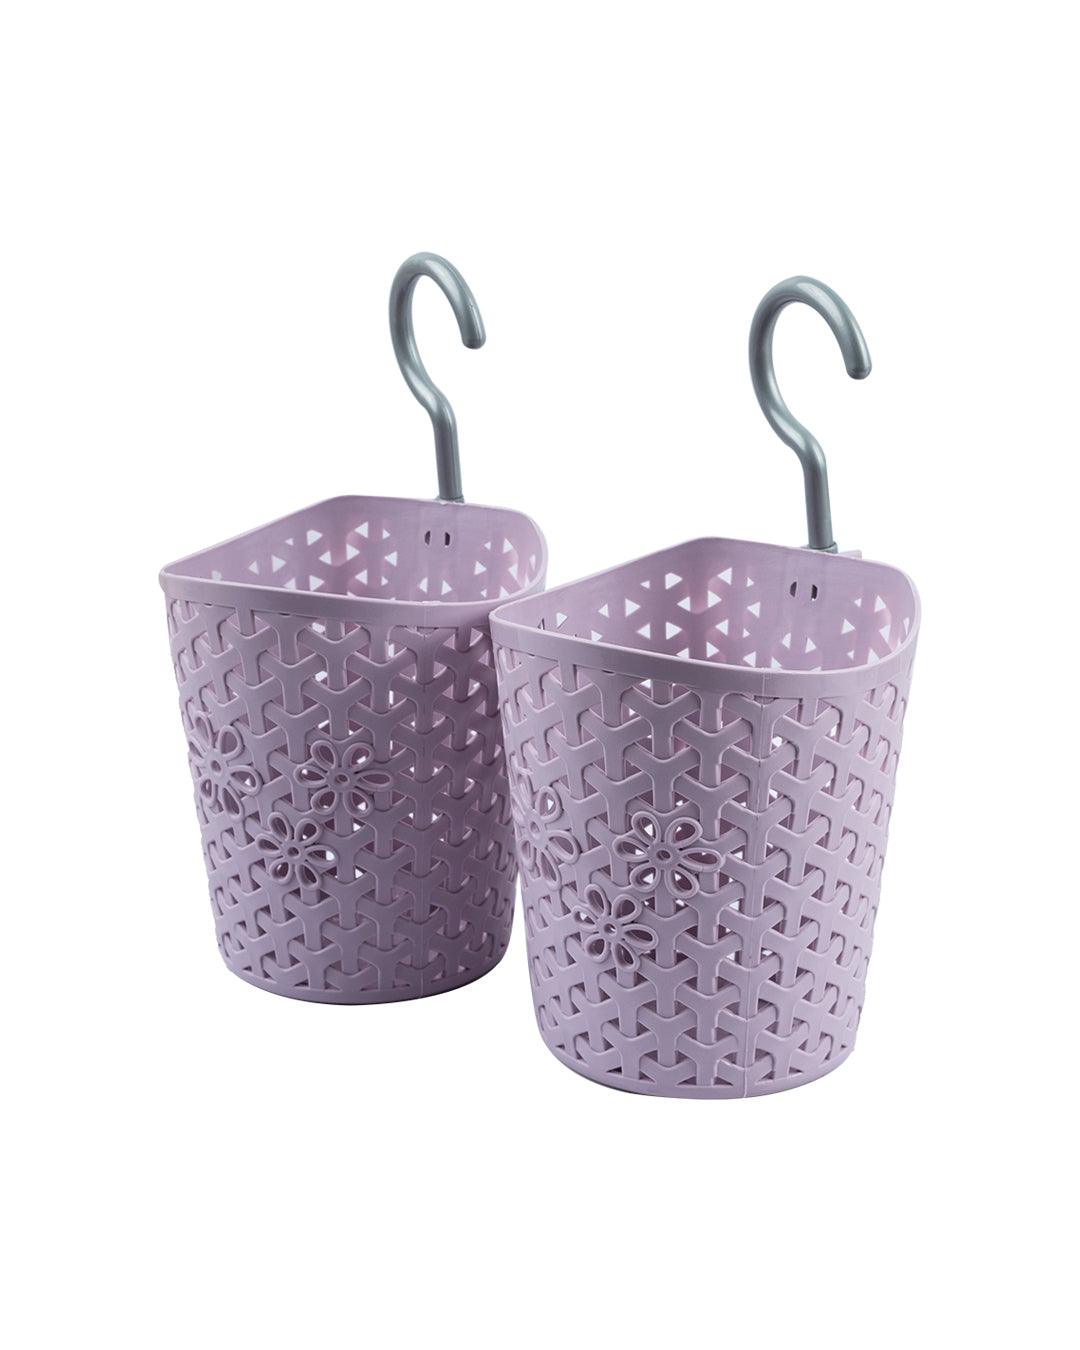 Baskets with Hook, Purple, Plastic, Set of 2 - MARKET 99